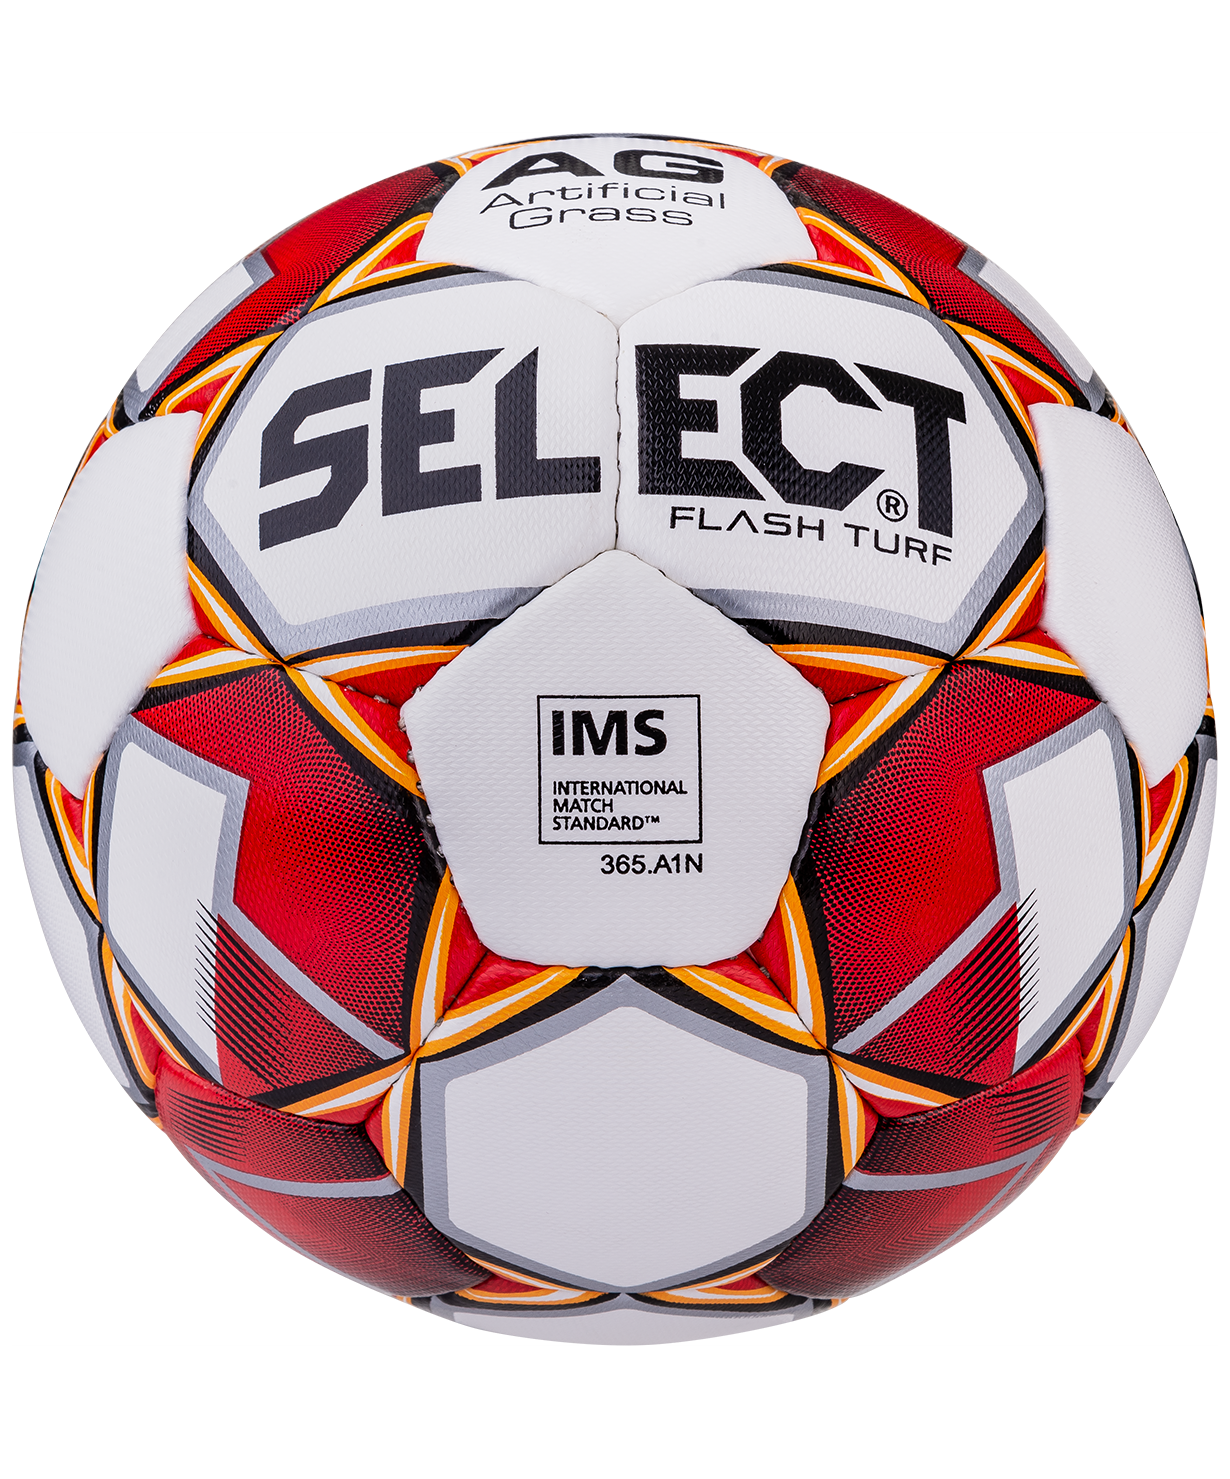 Футбольные флеш. Селект мяч футбольный 5 Flash Turf. Мяч футбольный select Flash Turf IMS 810708 Р.5 желтый/красный/серый. Select Flash Turf IMS 4. International Match Standard IMS.